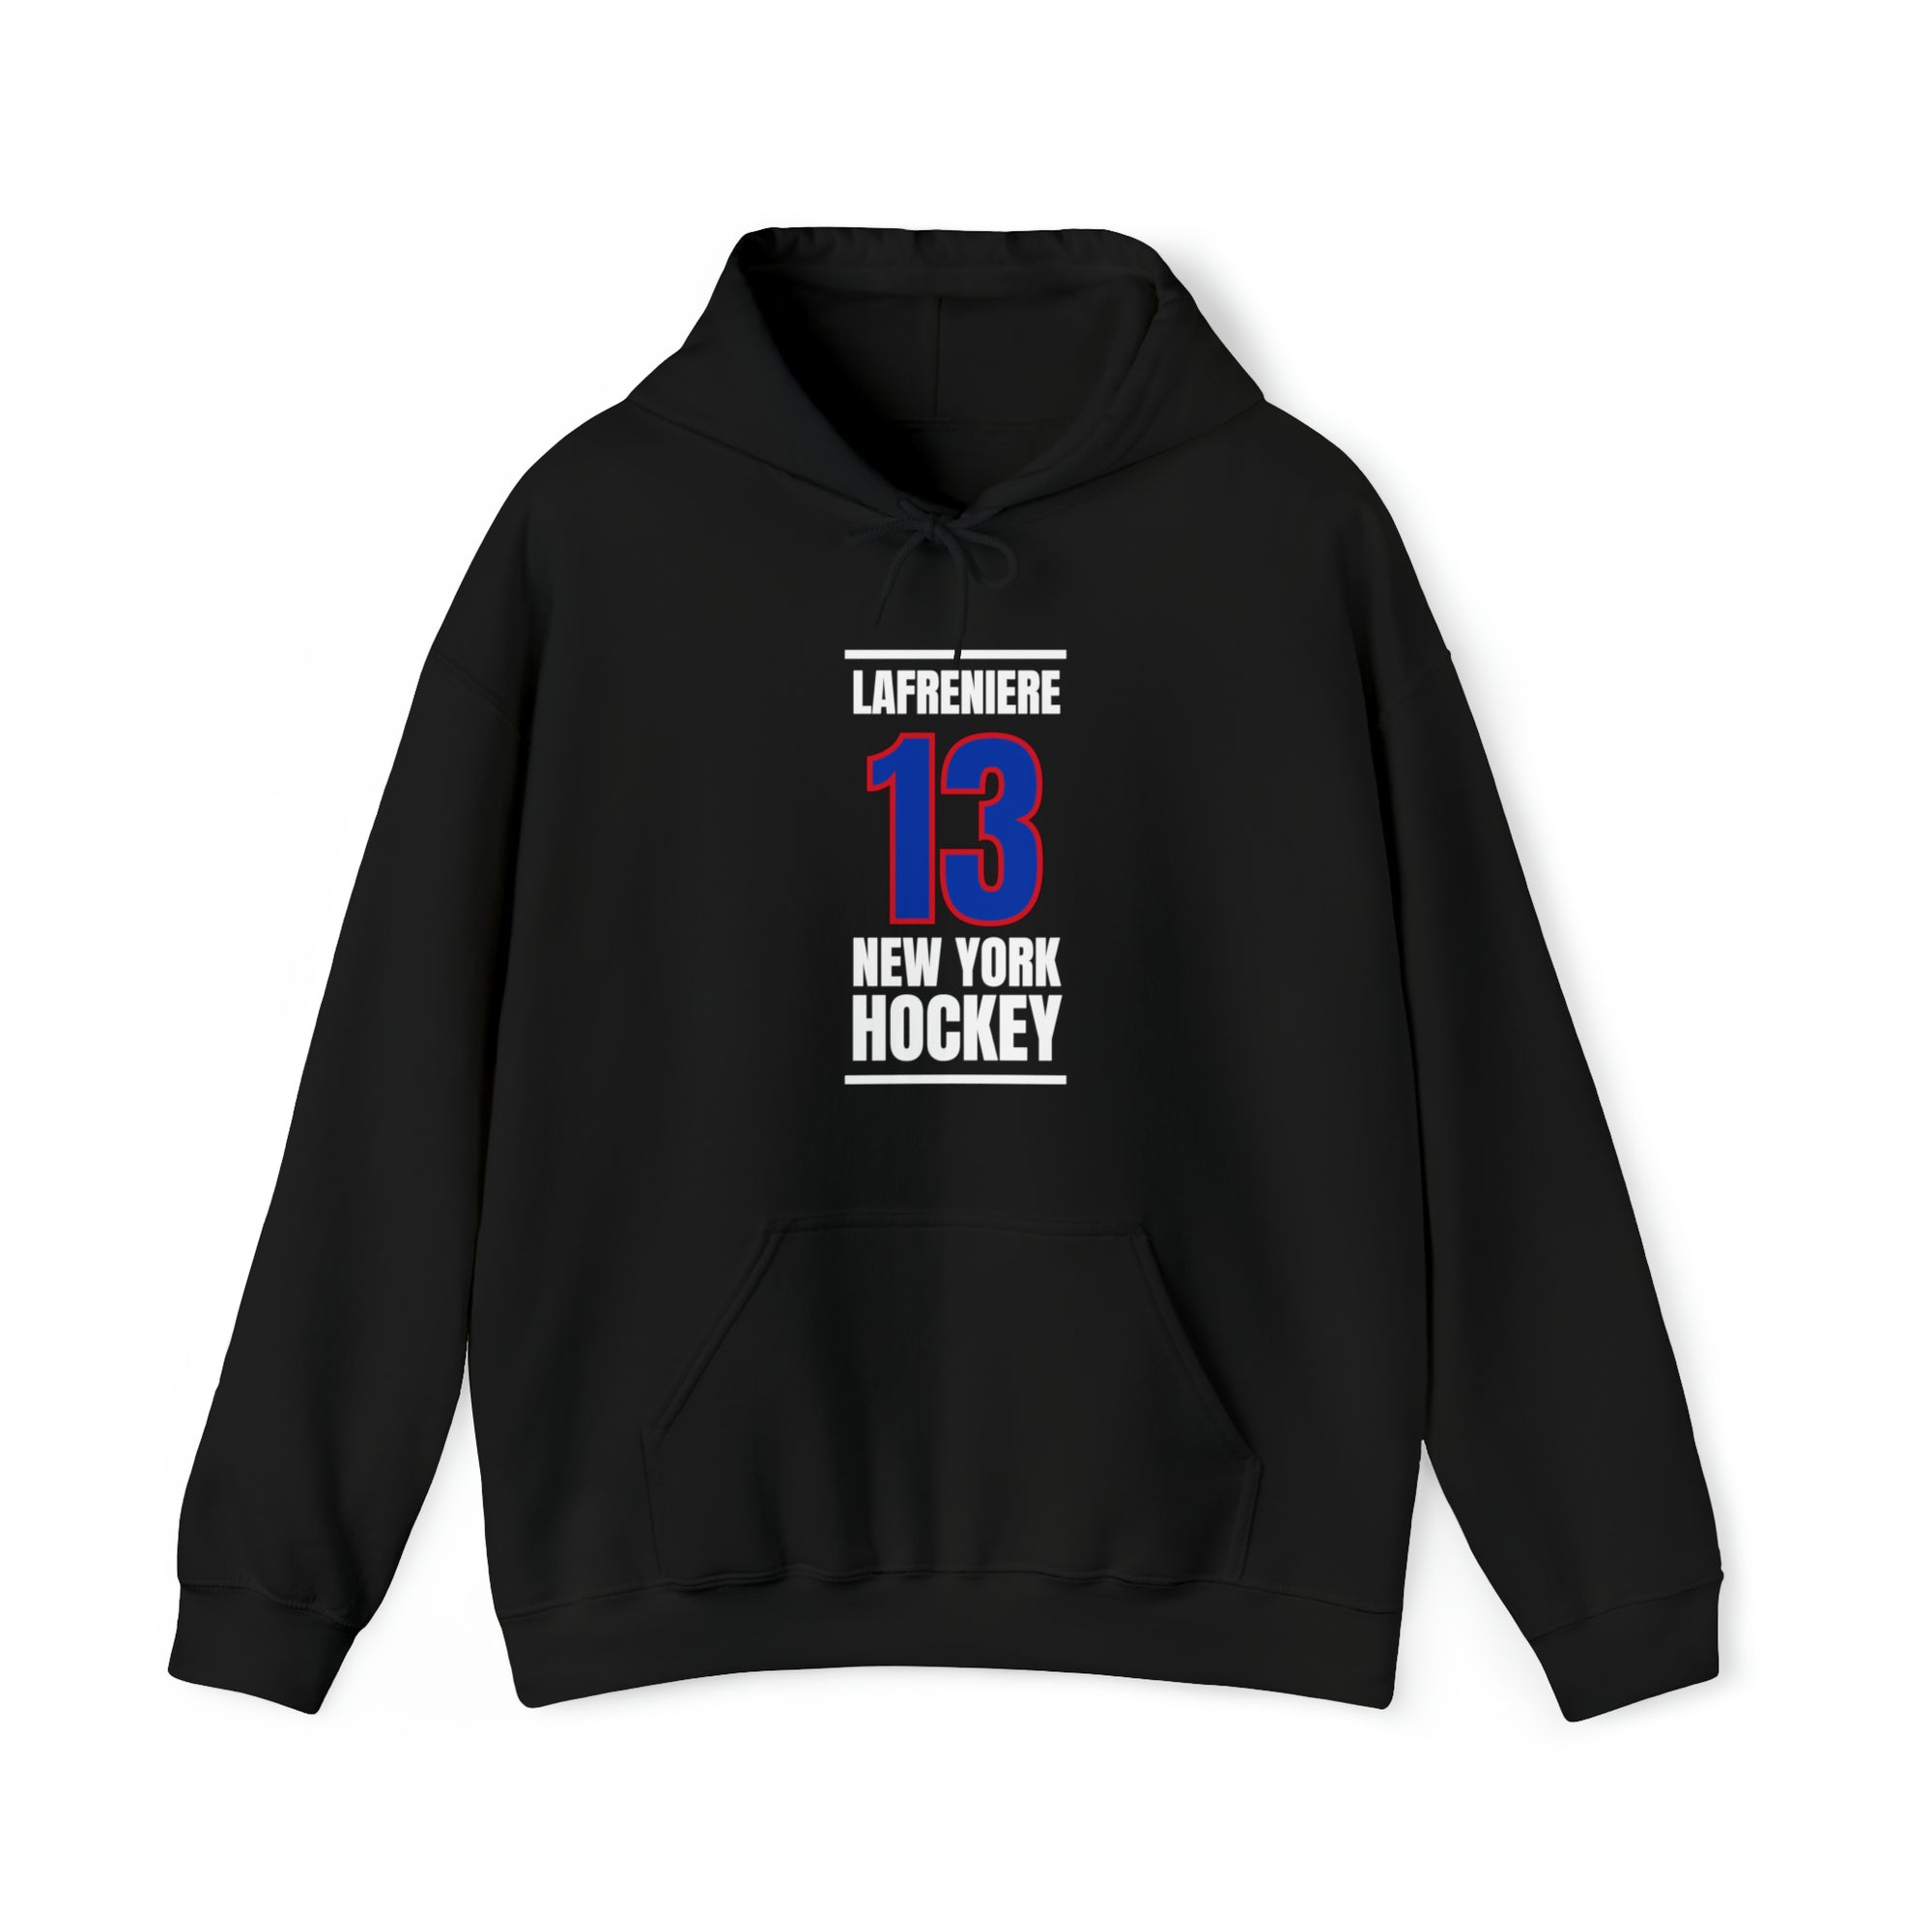 Lafreniere 13 New York Hockey Royal Blue Vertical Design Unisex Hooded Sweatshirt